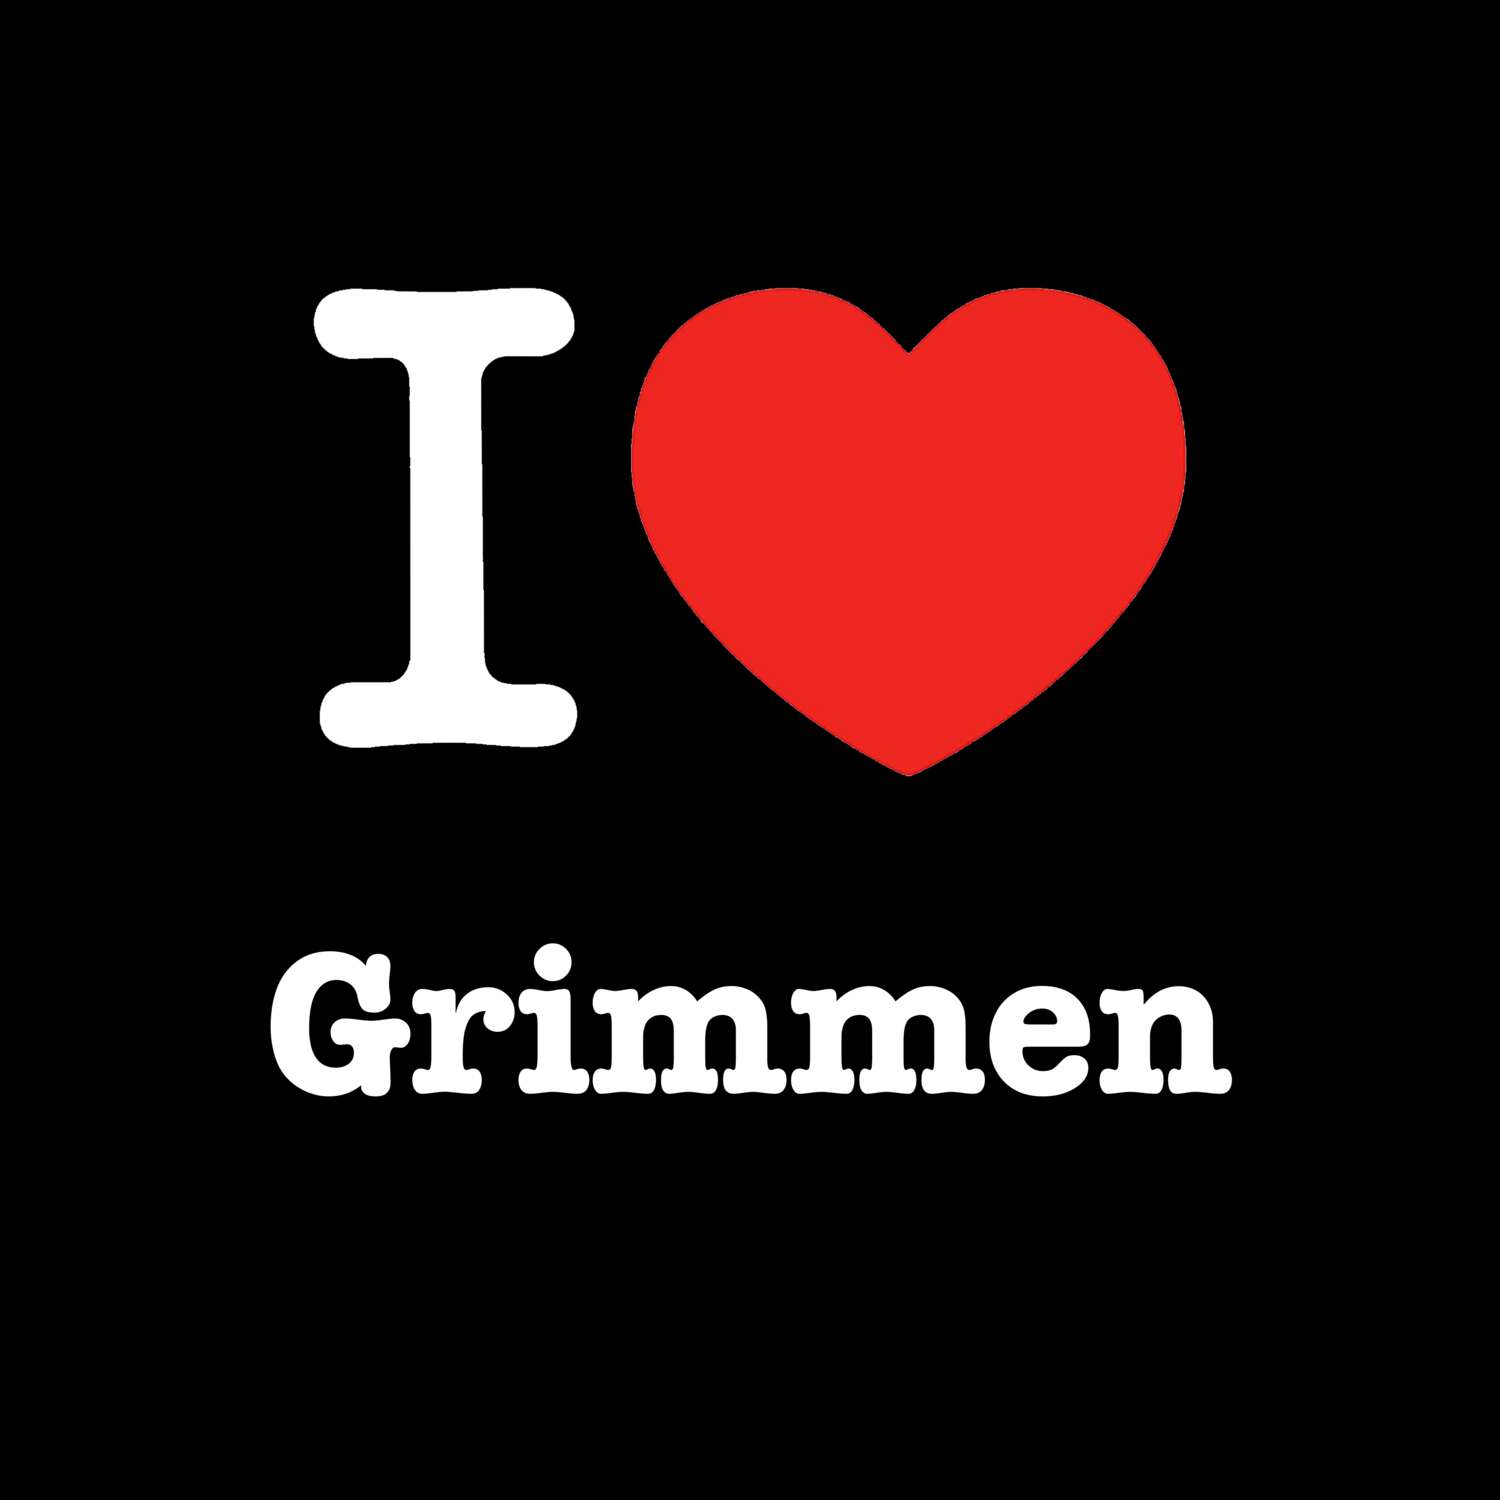 Grimmen T-Shirt »I love«